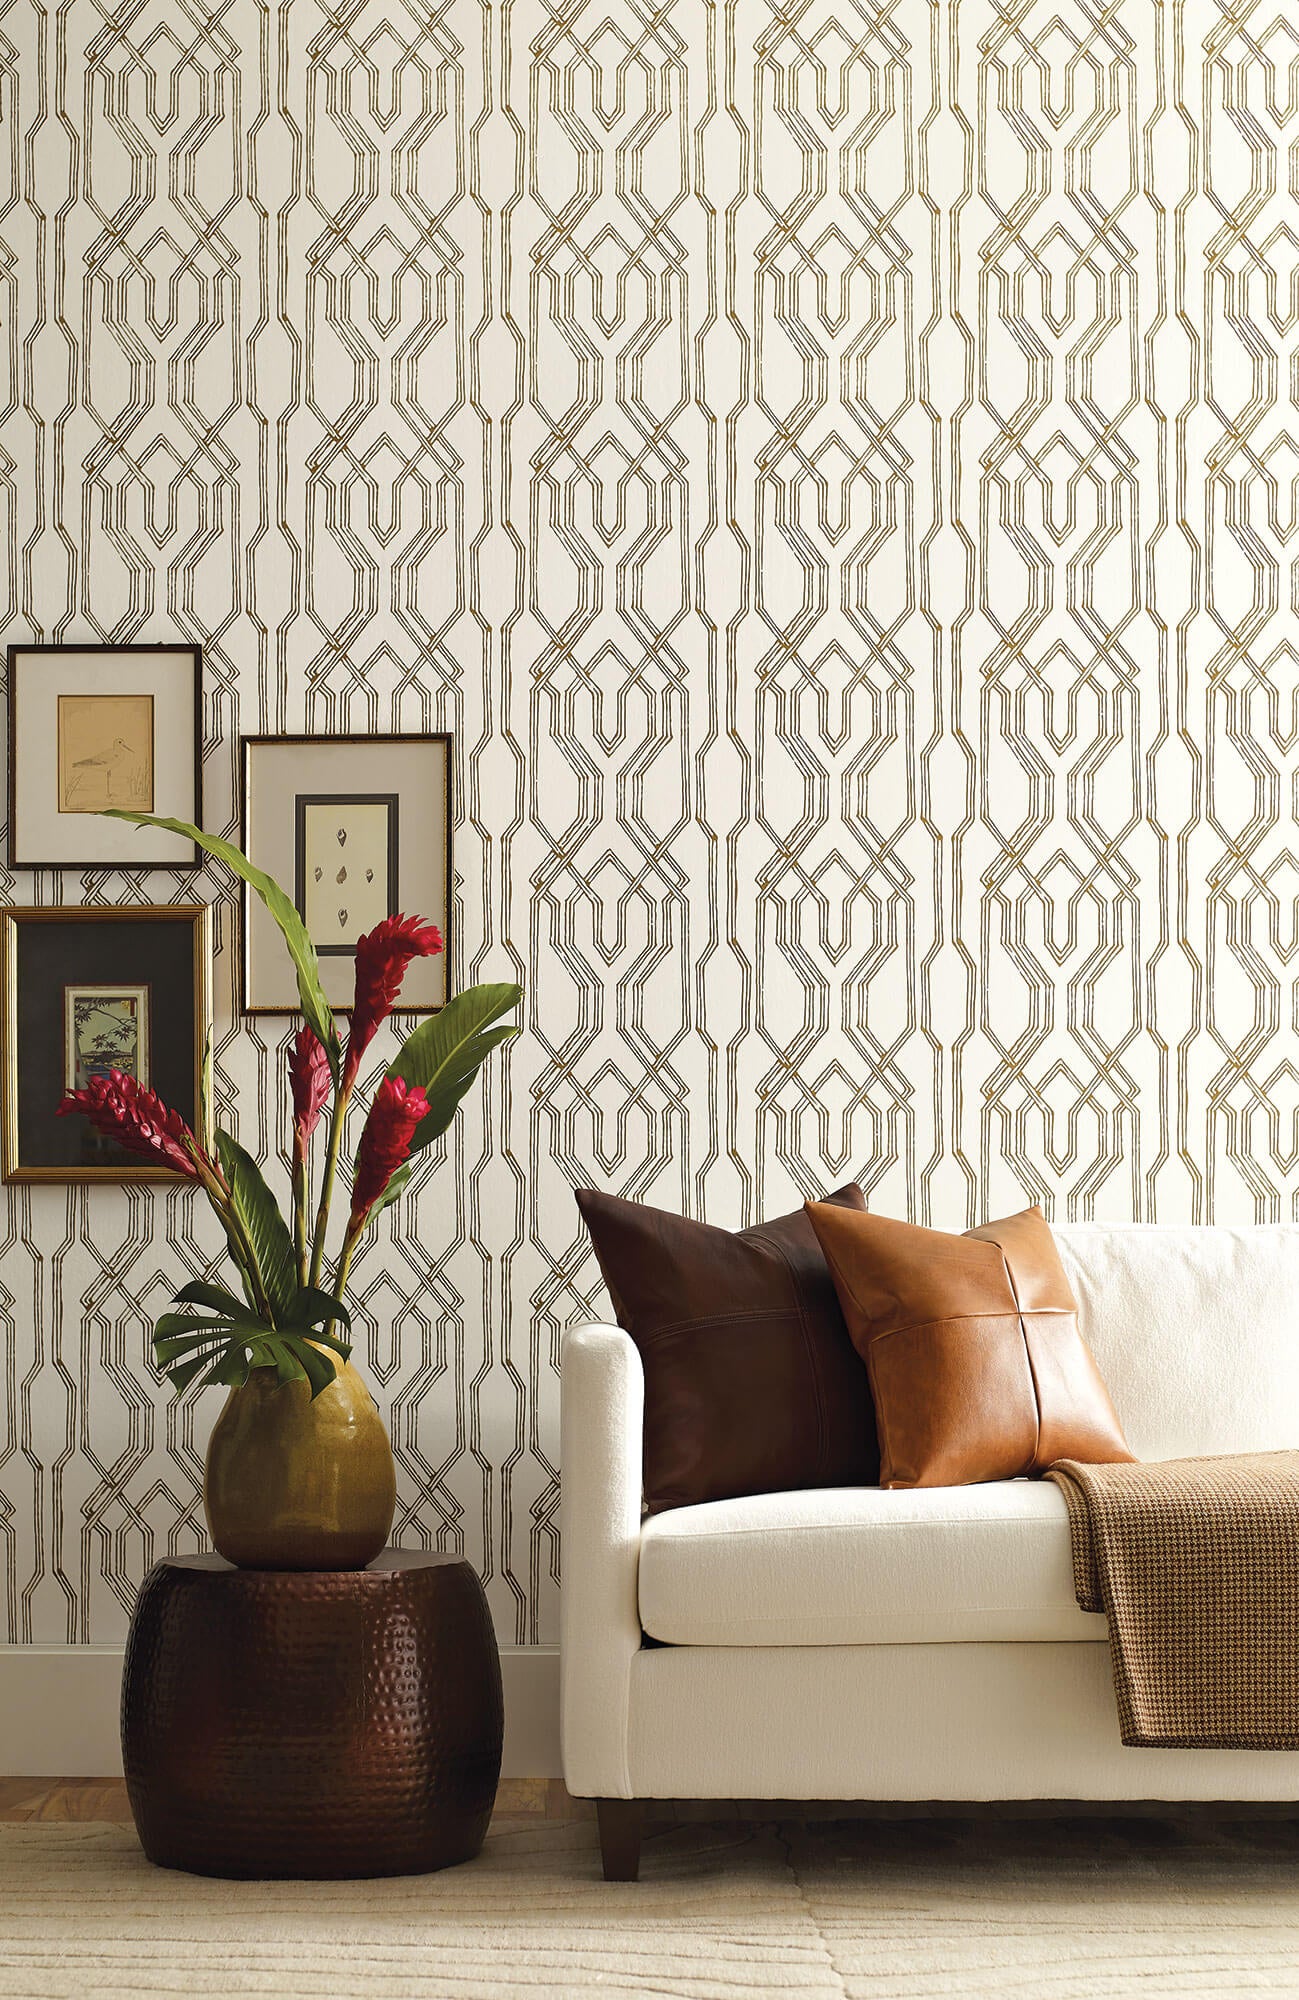 Ronald Redding Tea Garden Oriental Lattice Wallpaper - White & Gold